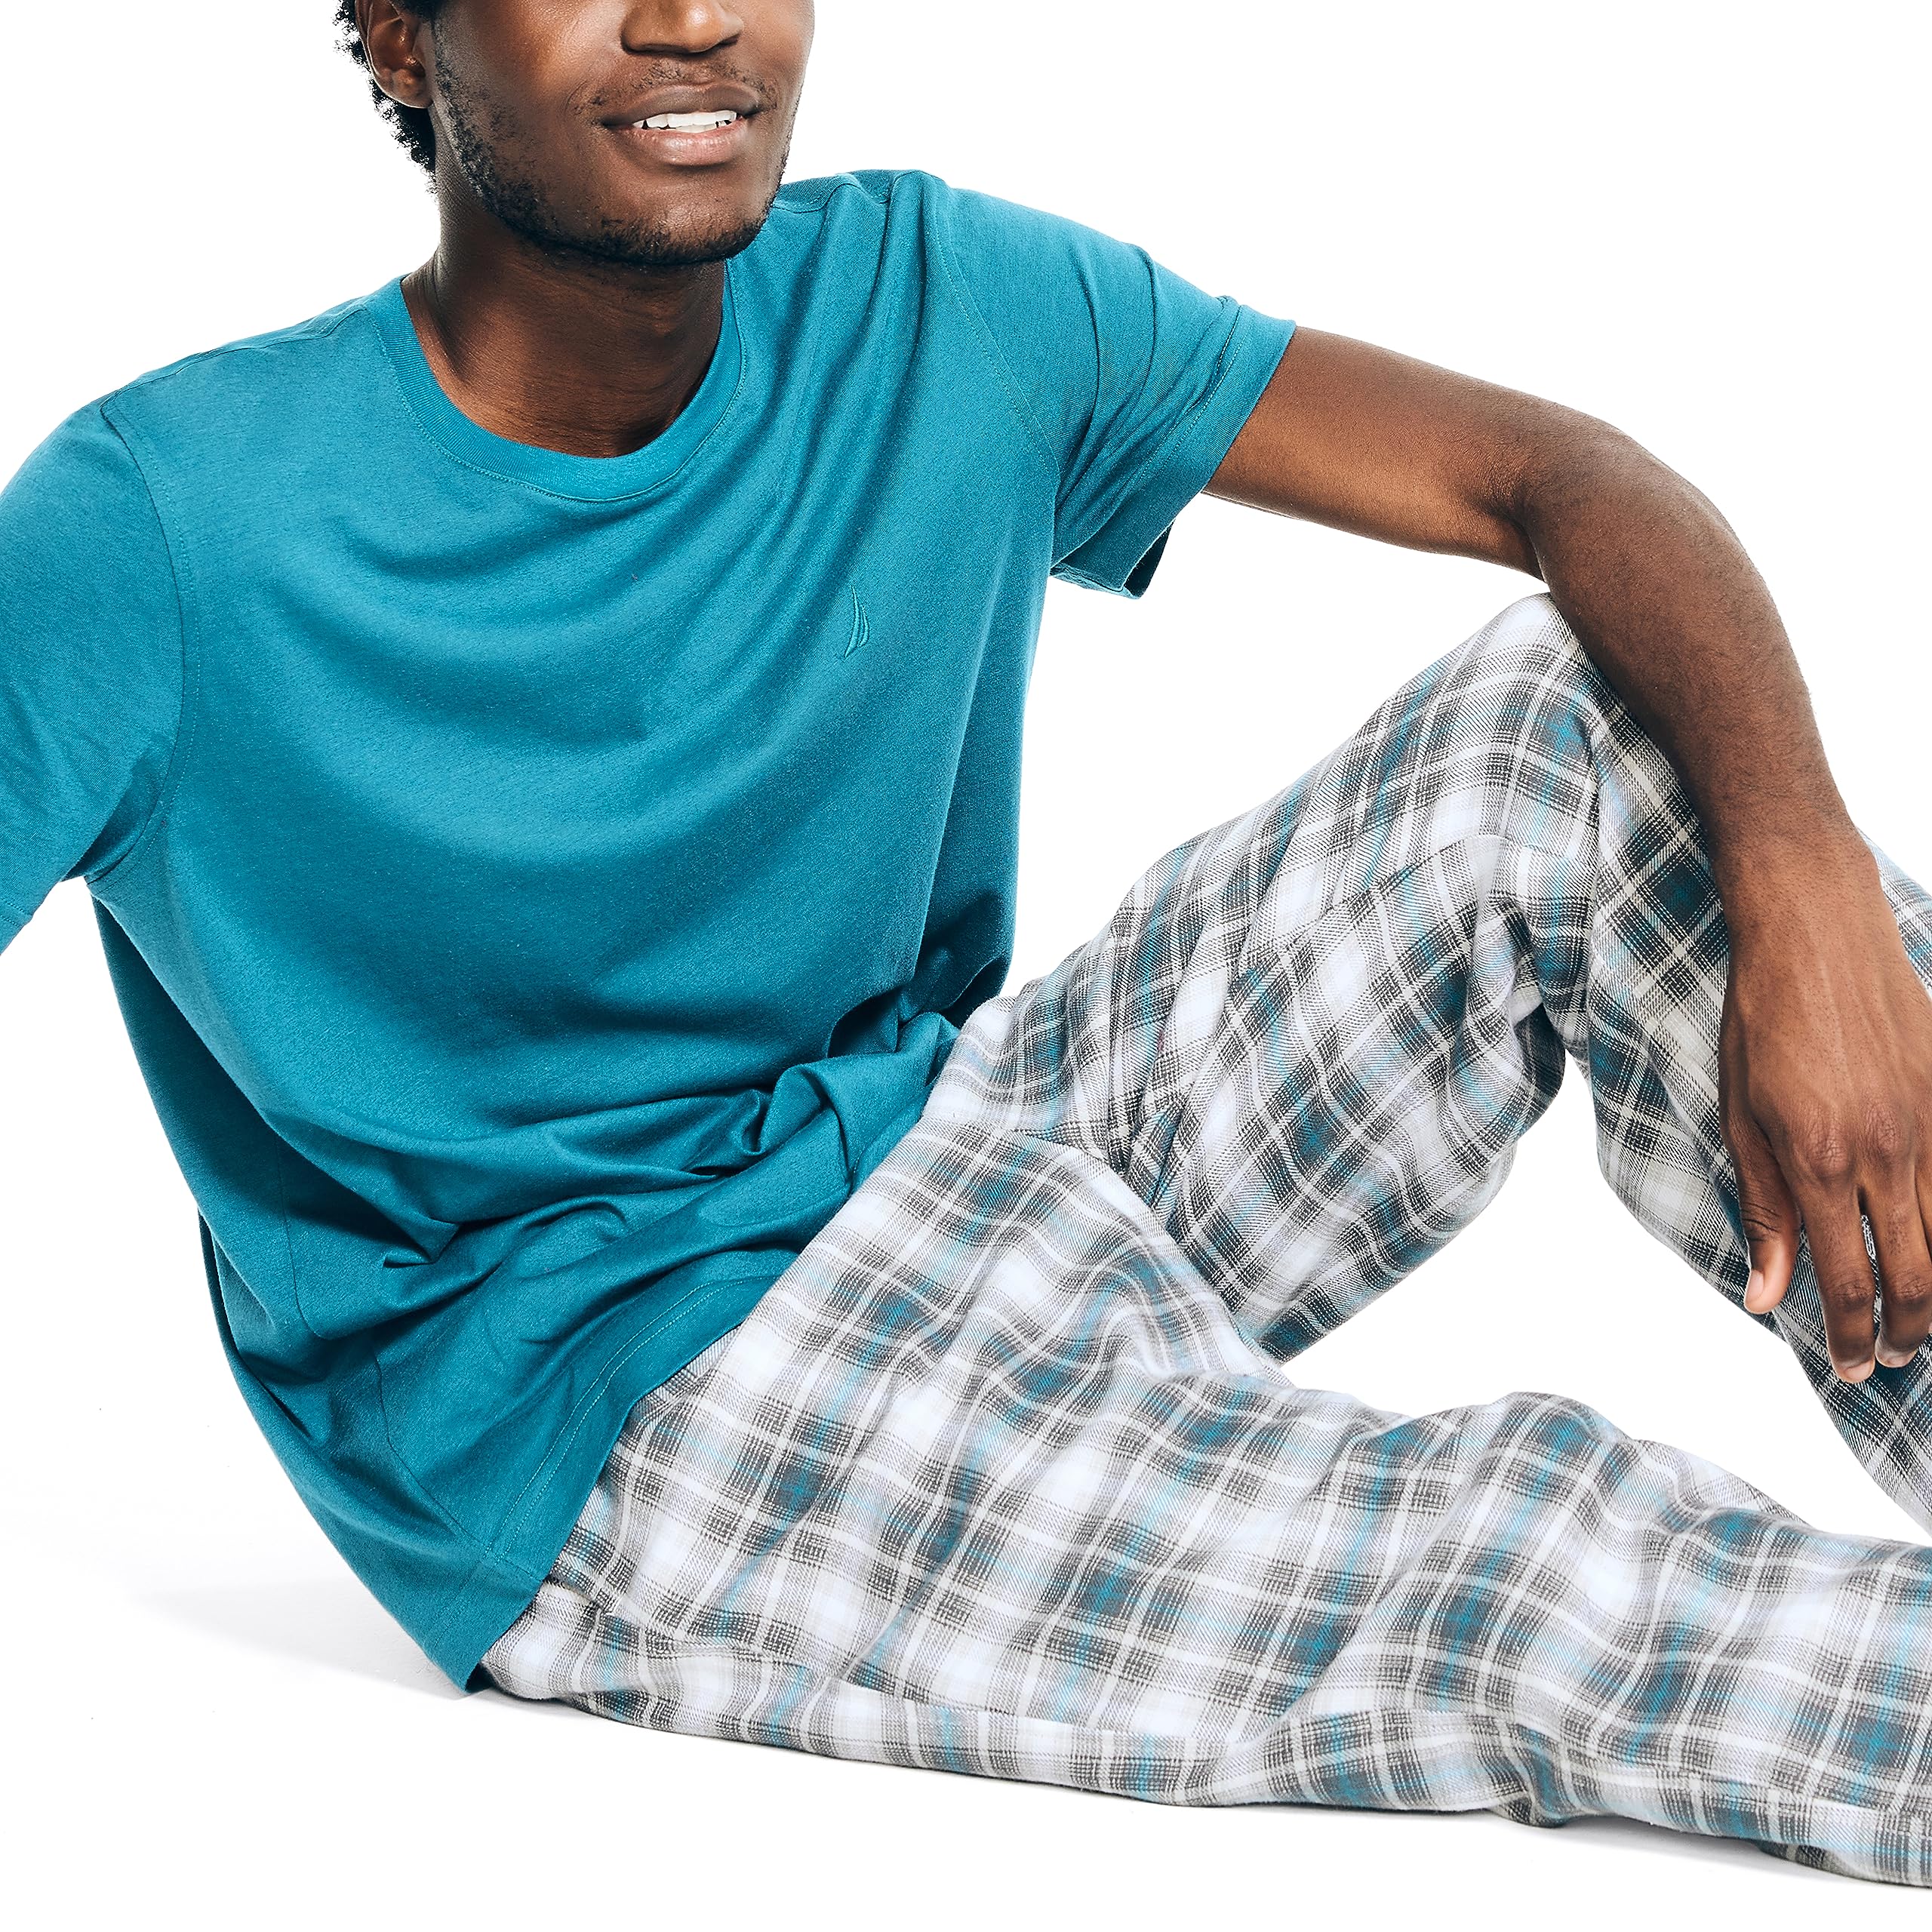 Nautica Men's Flannel Plaid Pajama Pant Set